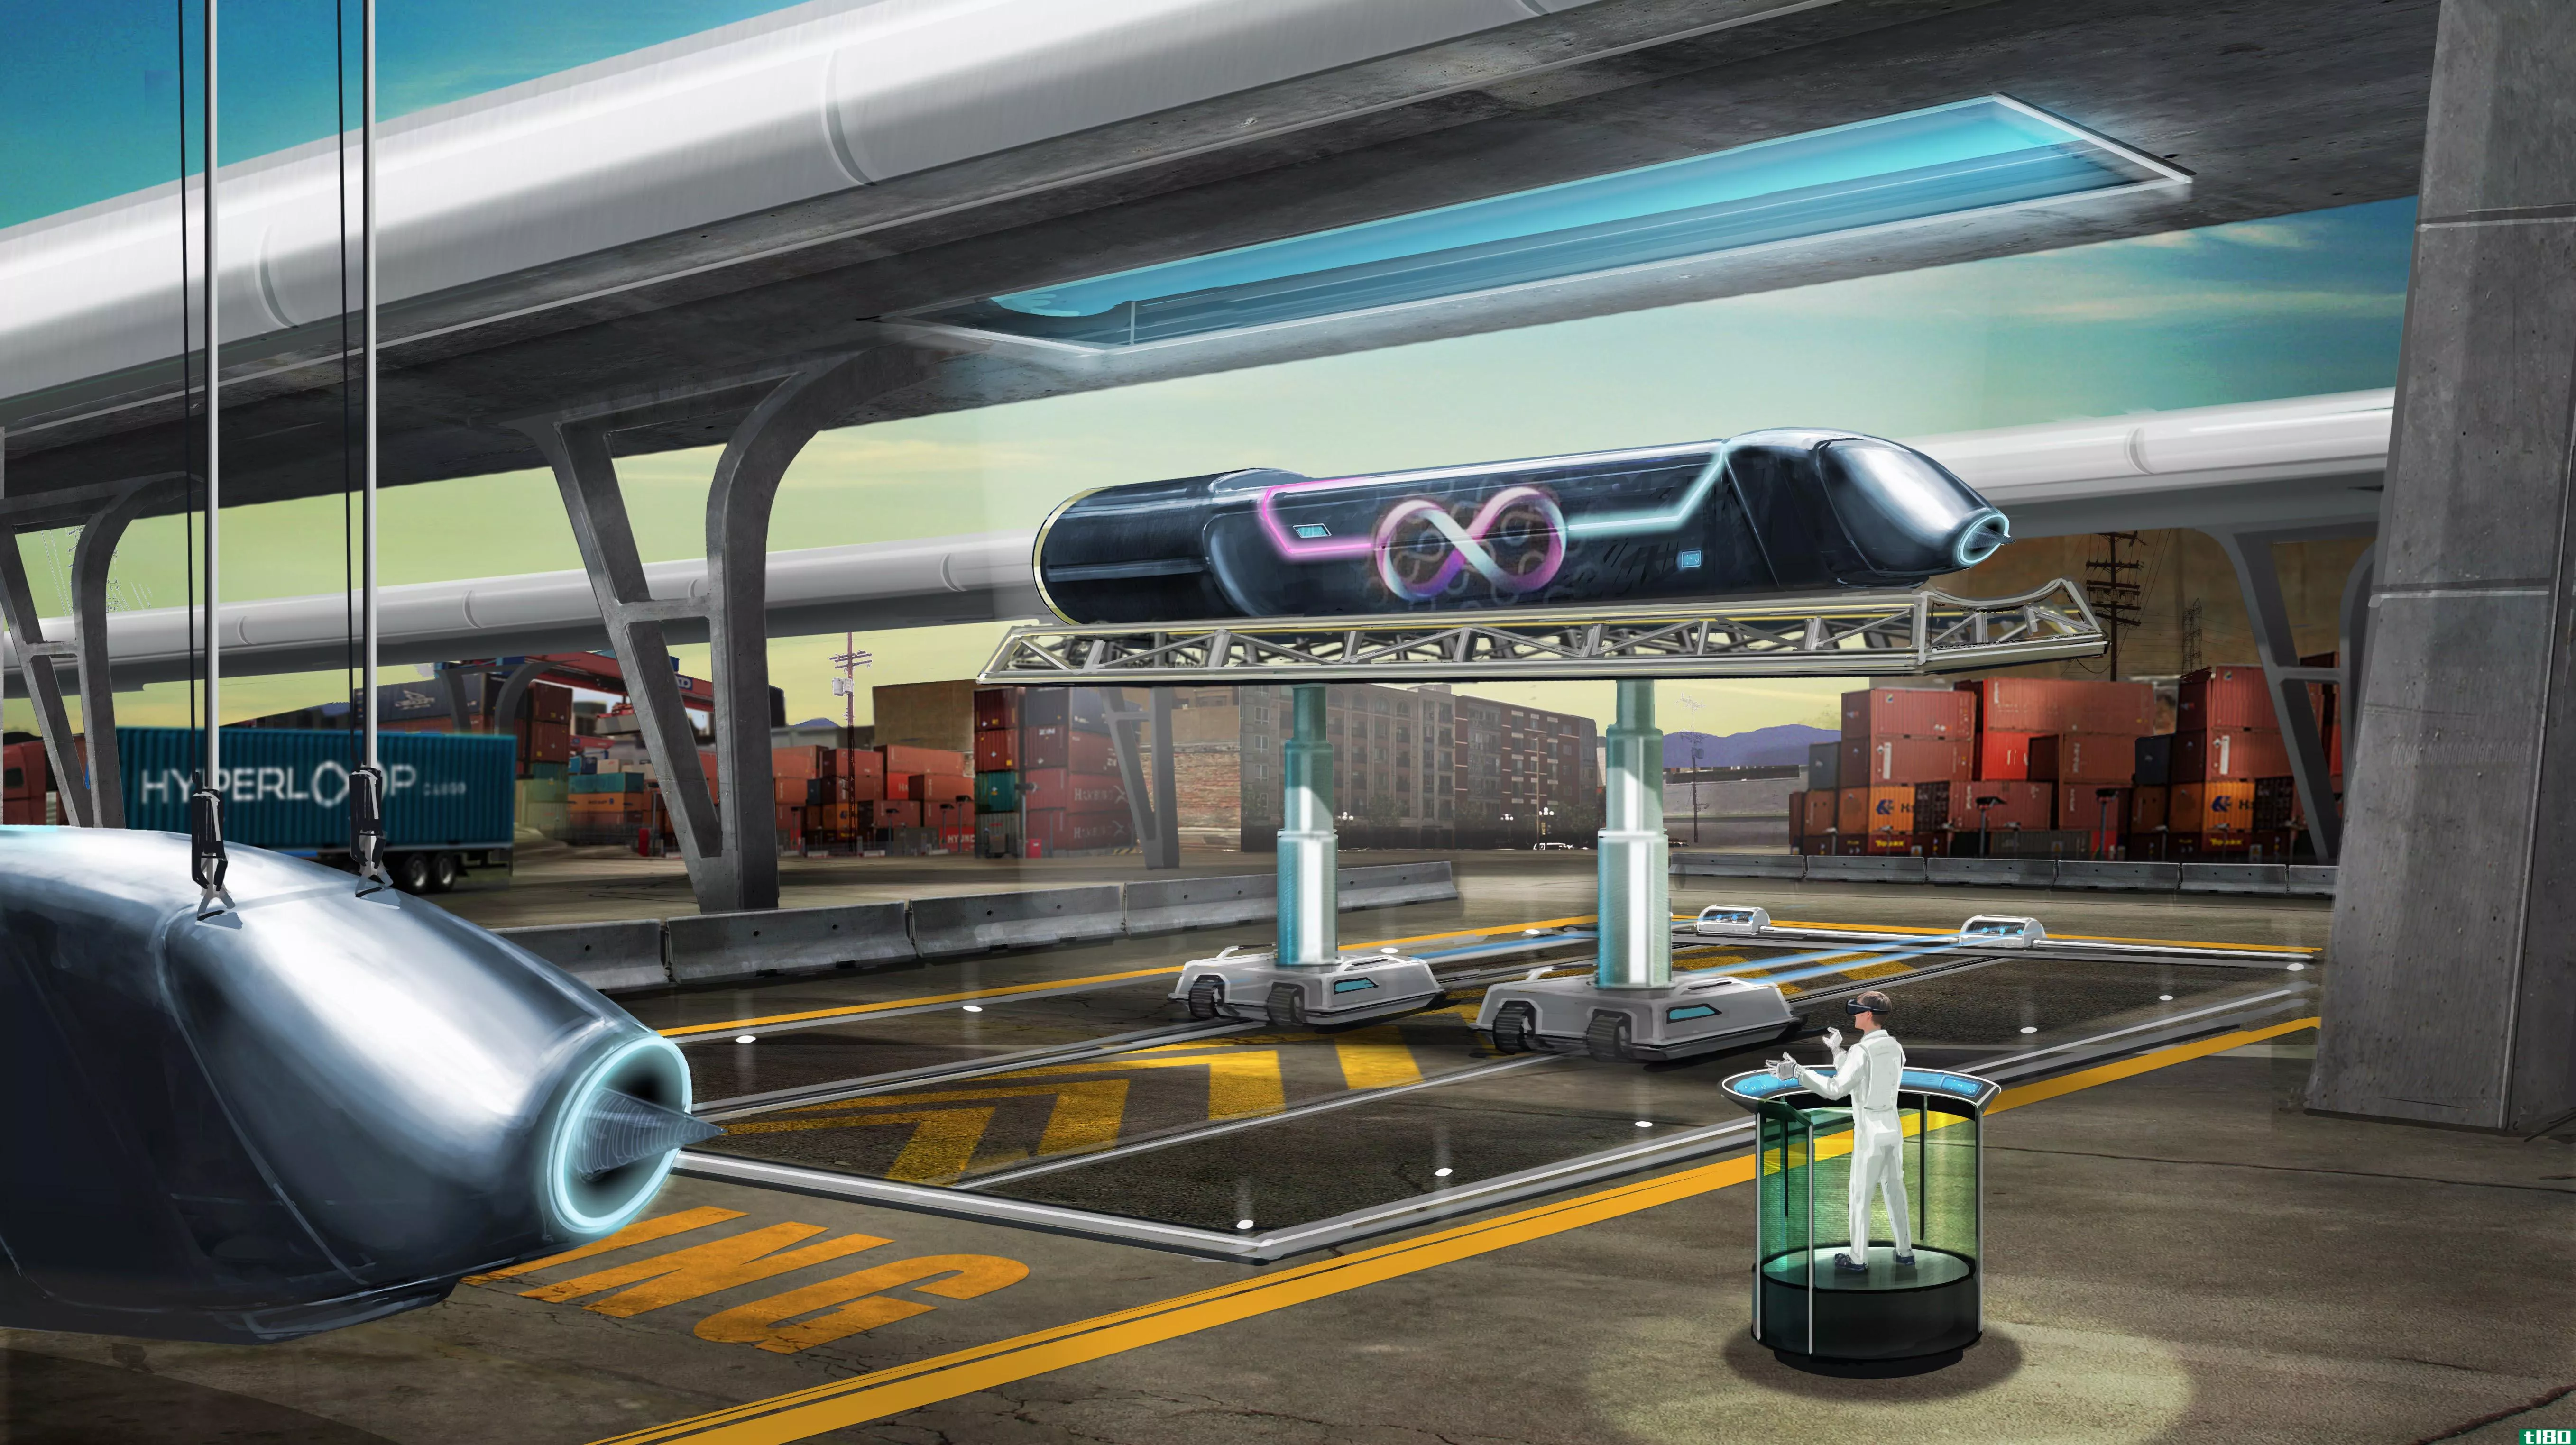 hyperloop technologies有一位首席执行官，并计划明年开放测试